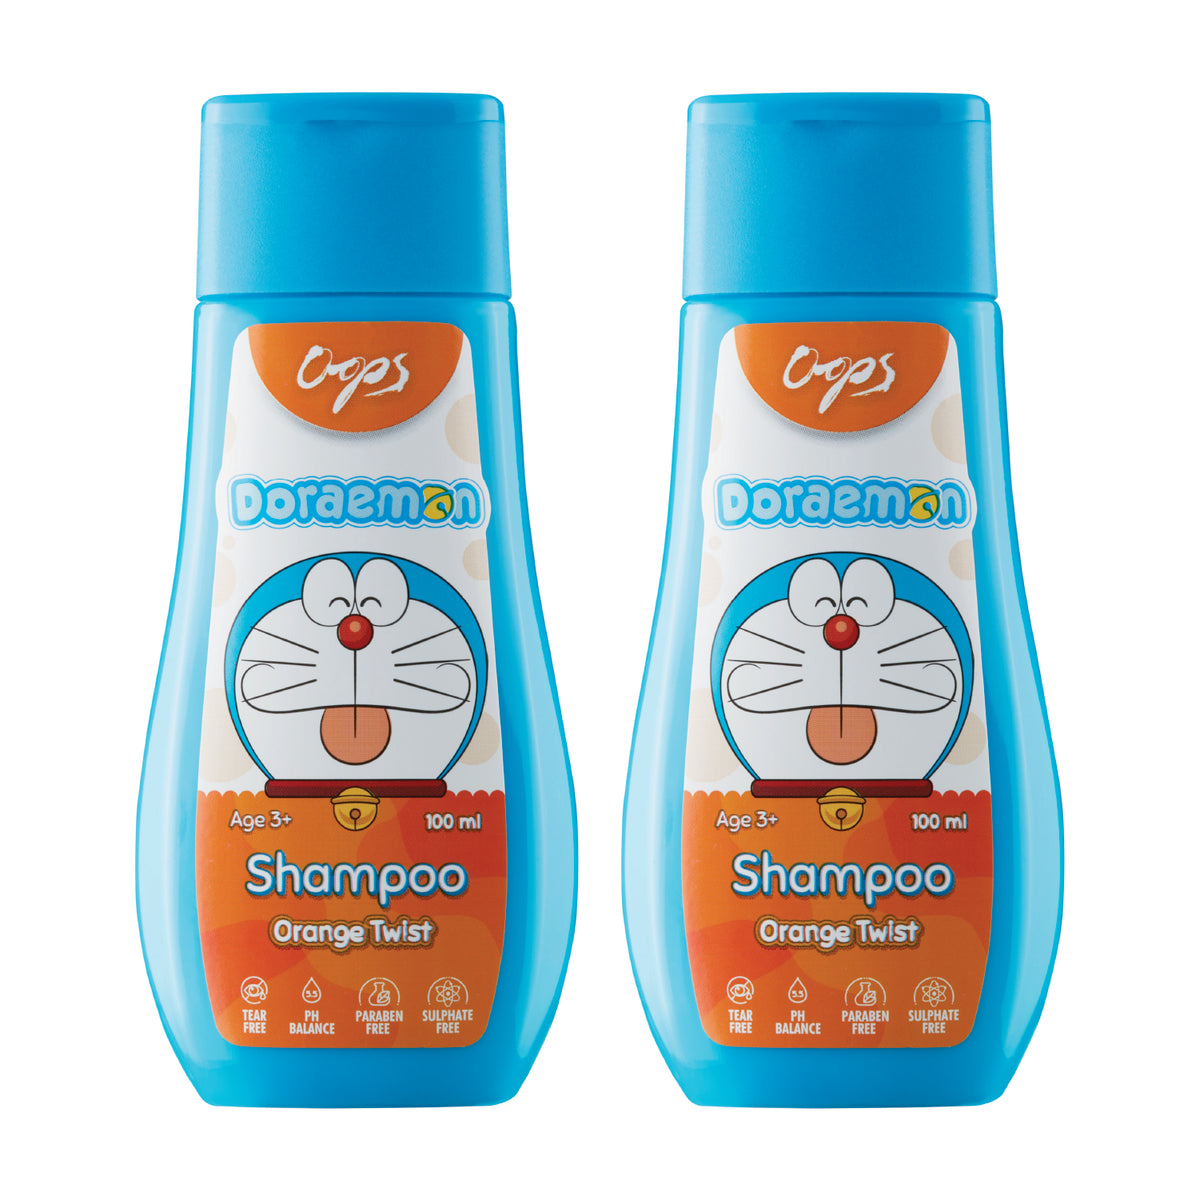 Oops Doraemon Shampoo - Orange Twist, 100ml : Buy 1 Get 1 Free! Gardenia Cosmotrade LLP